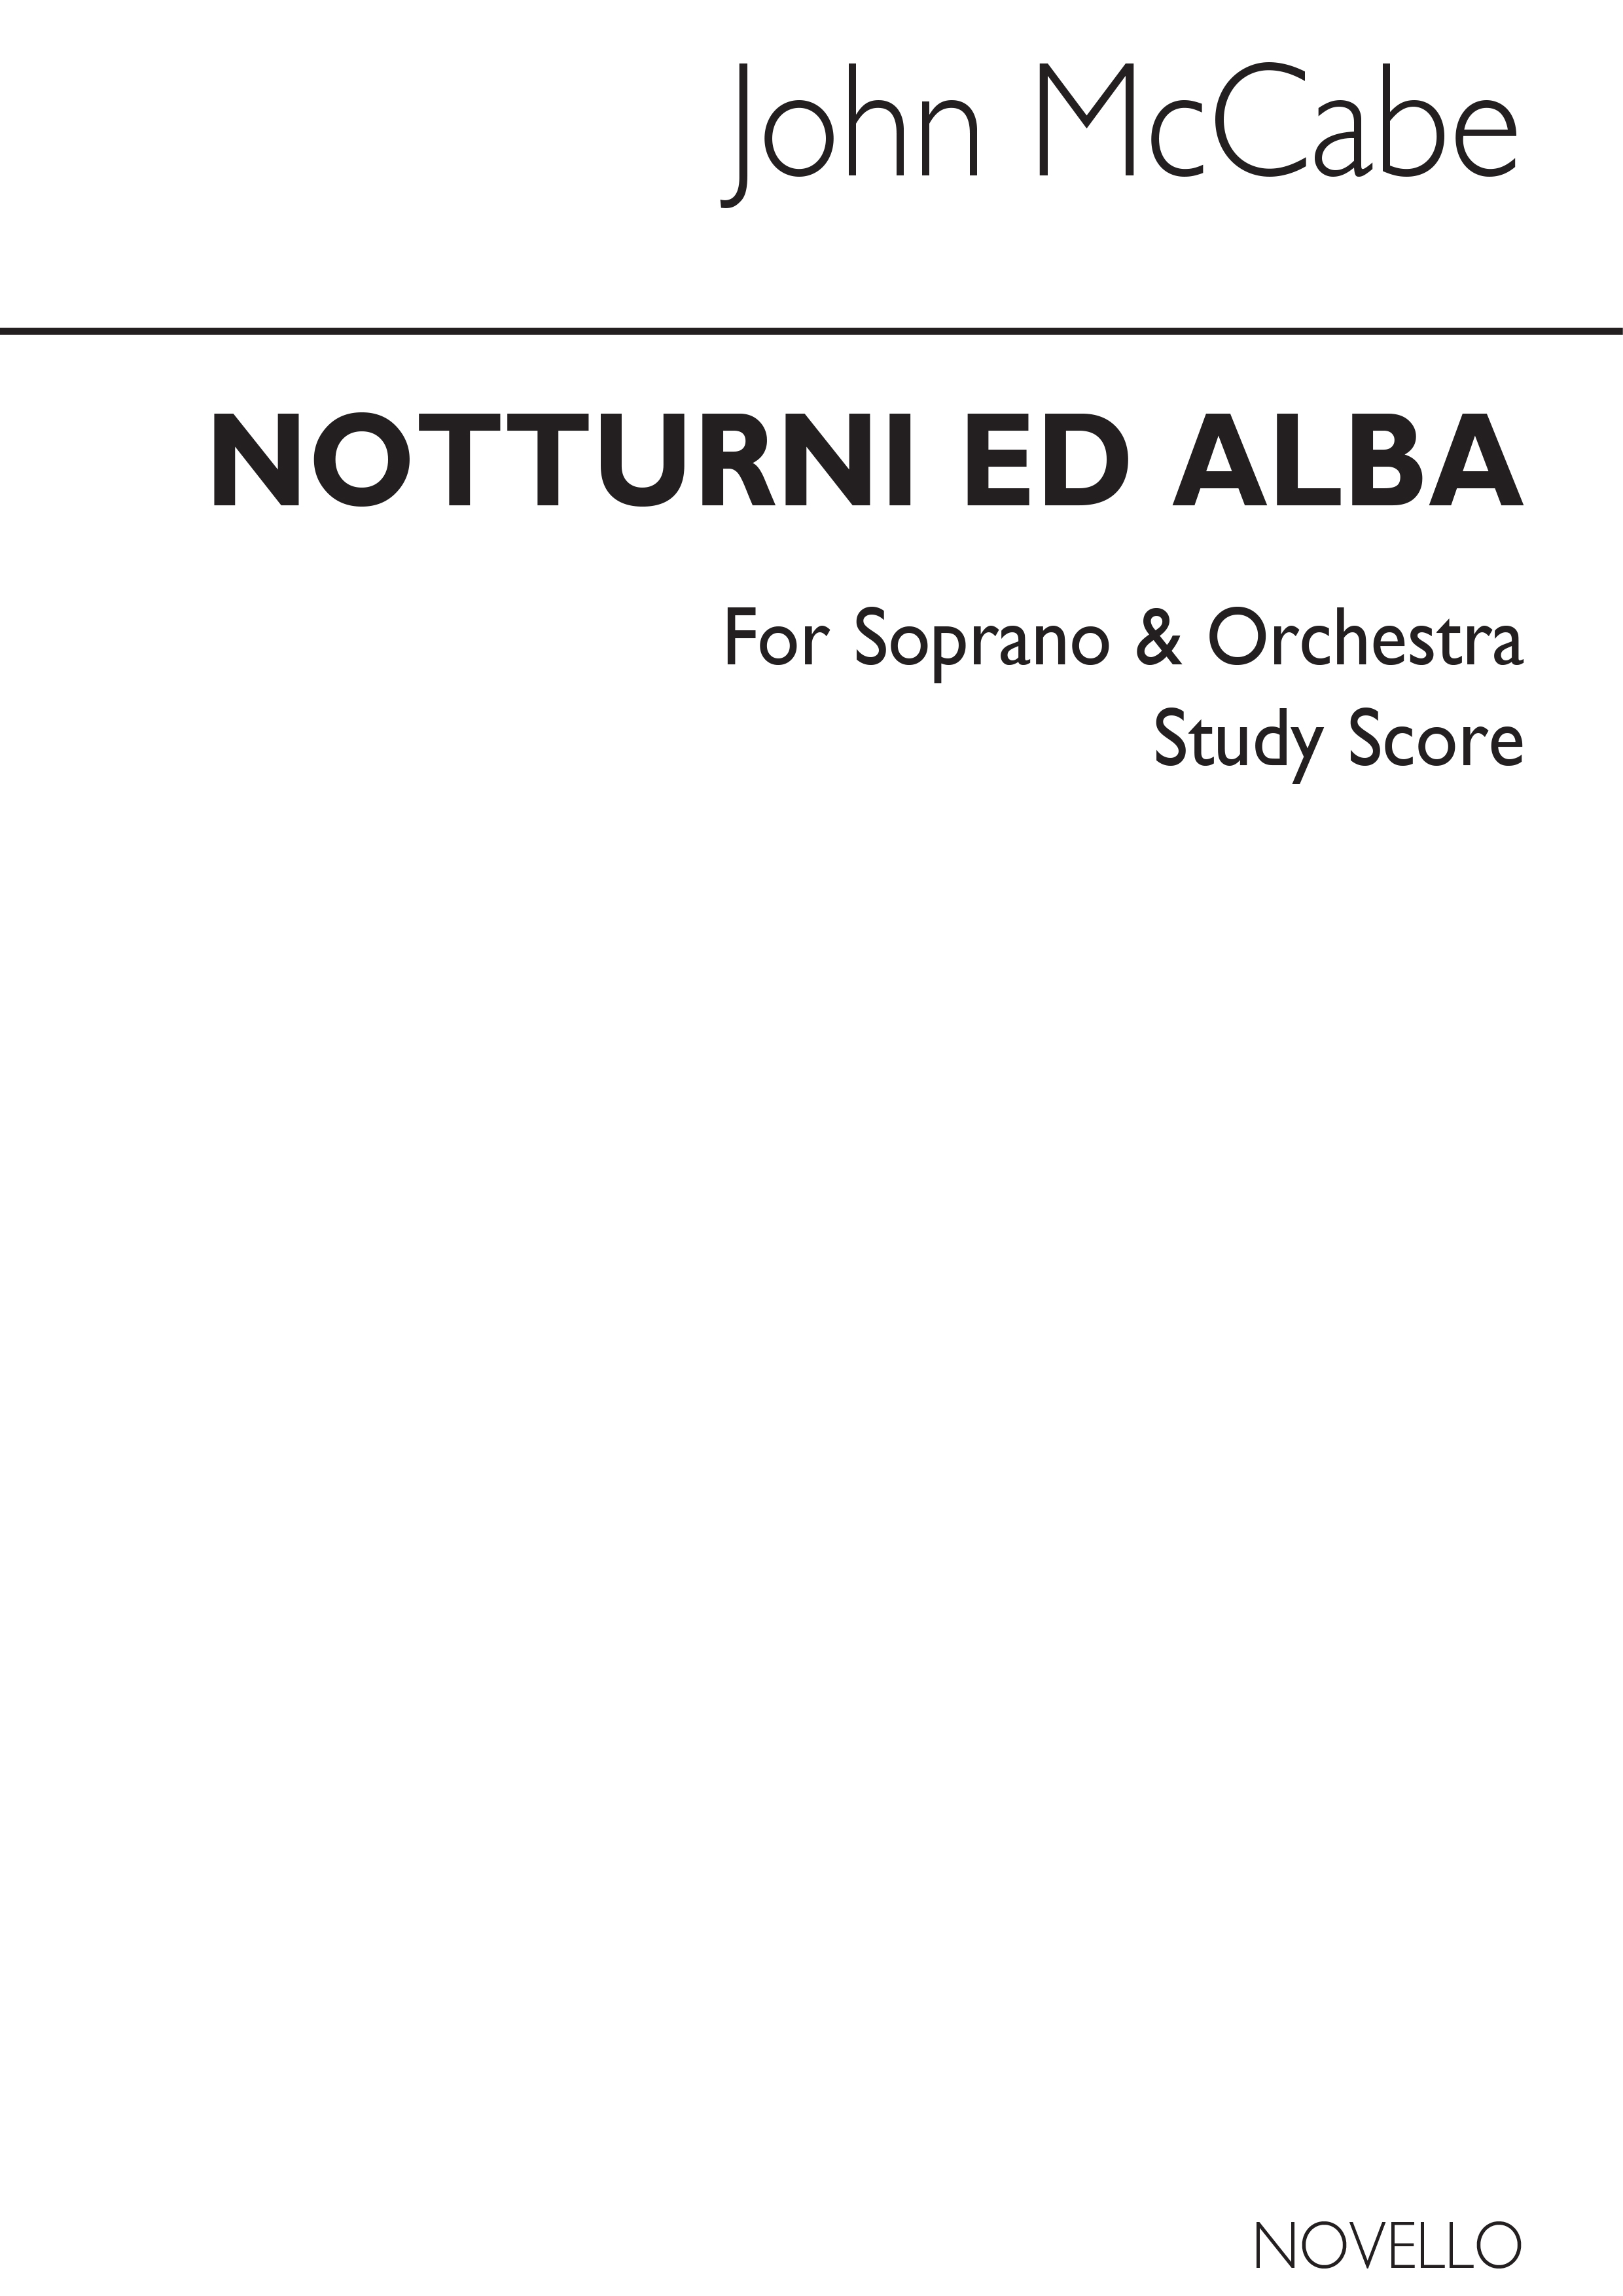 John McCabe: Notturni: Soprano: Study Score